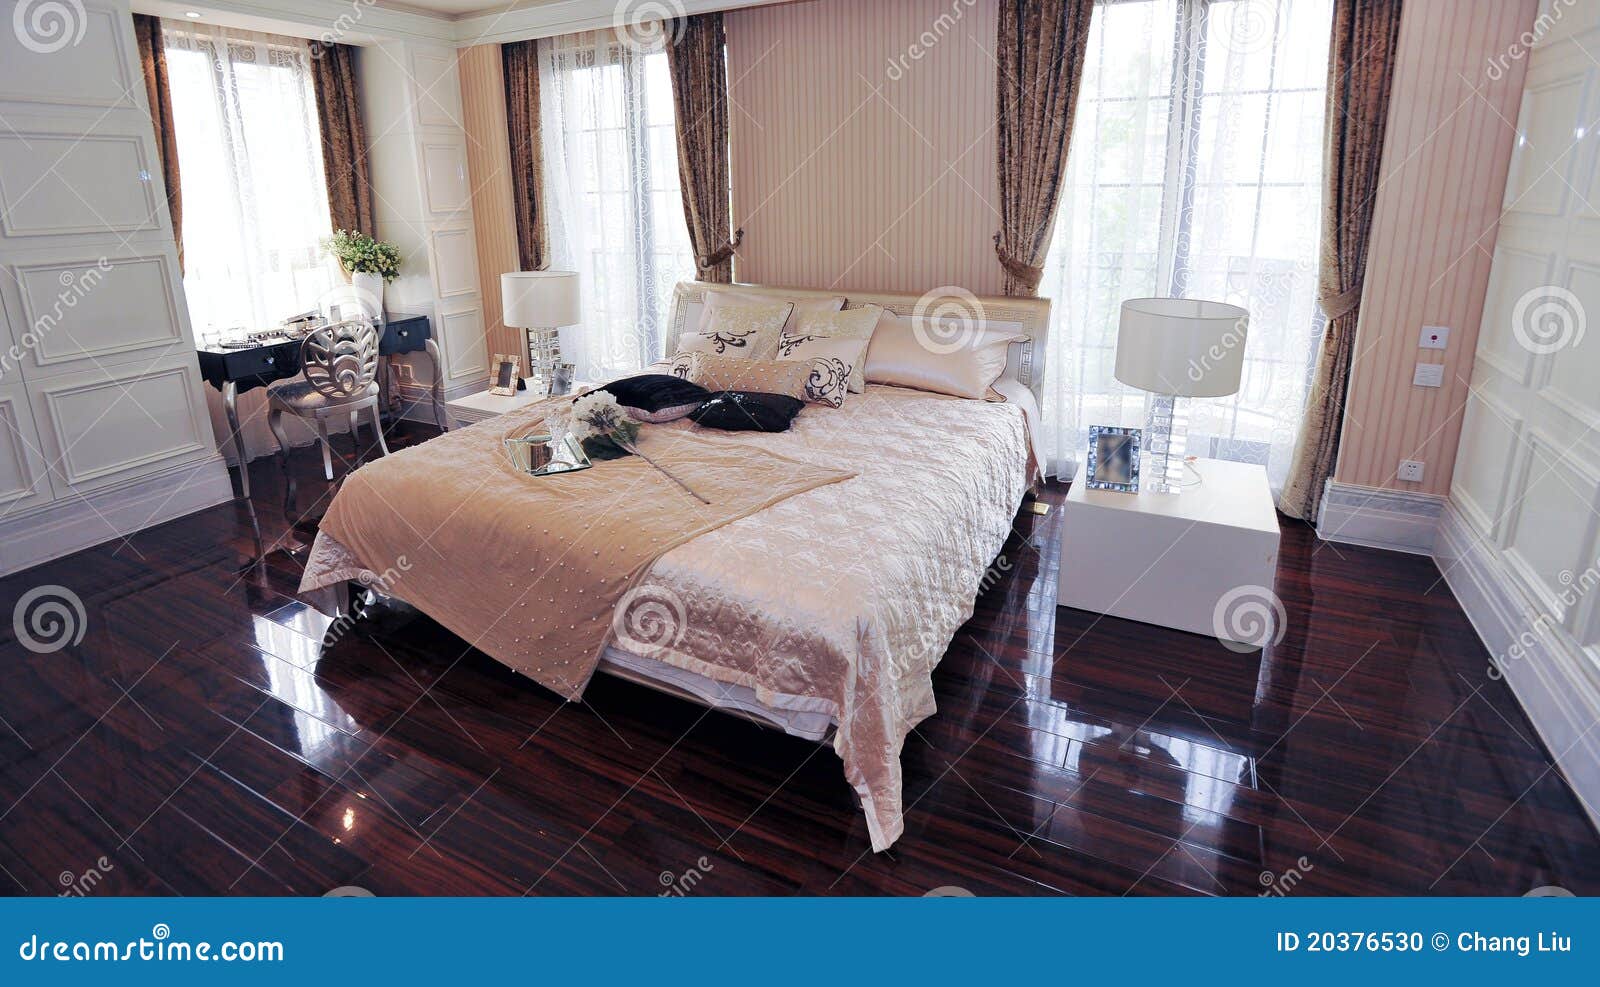 European Royal Kingbed In Bedroom Stock Photo - Image: 20376530